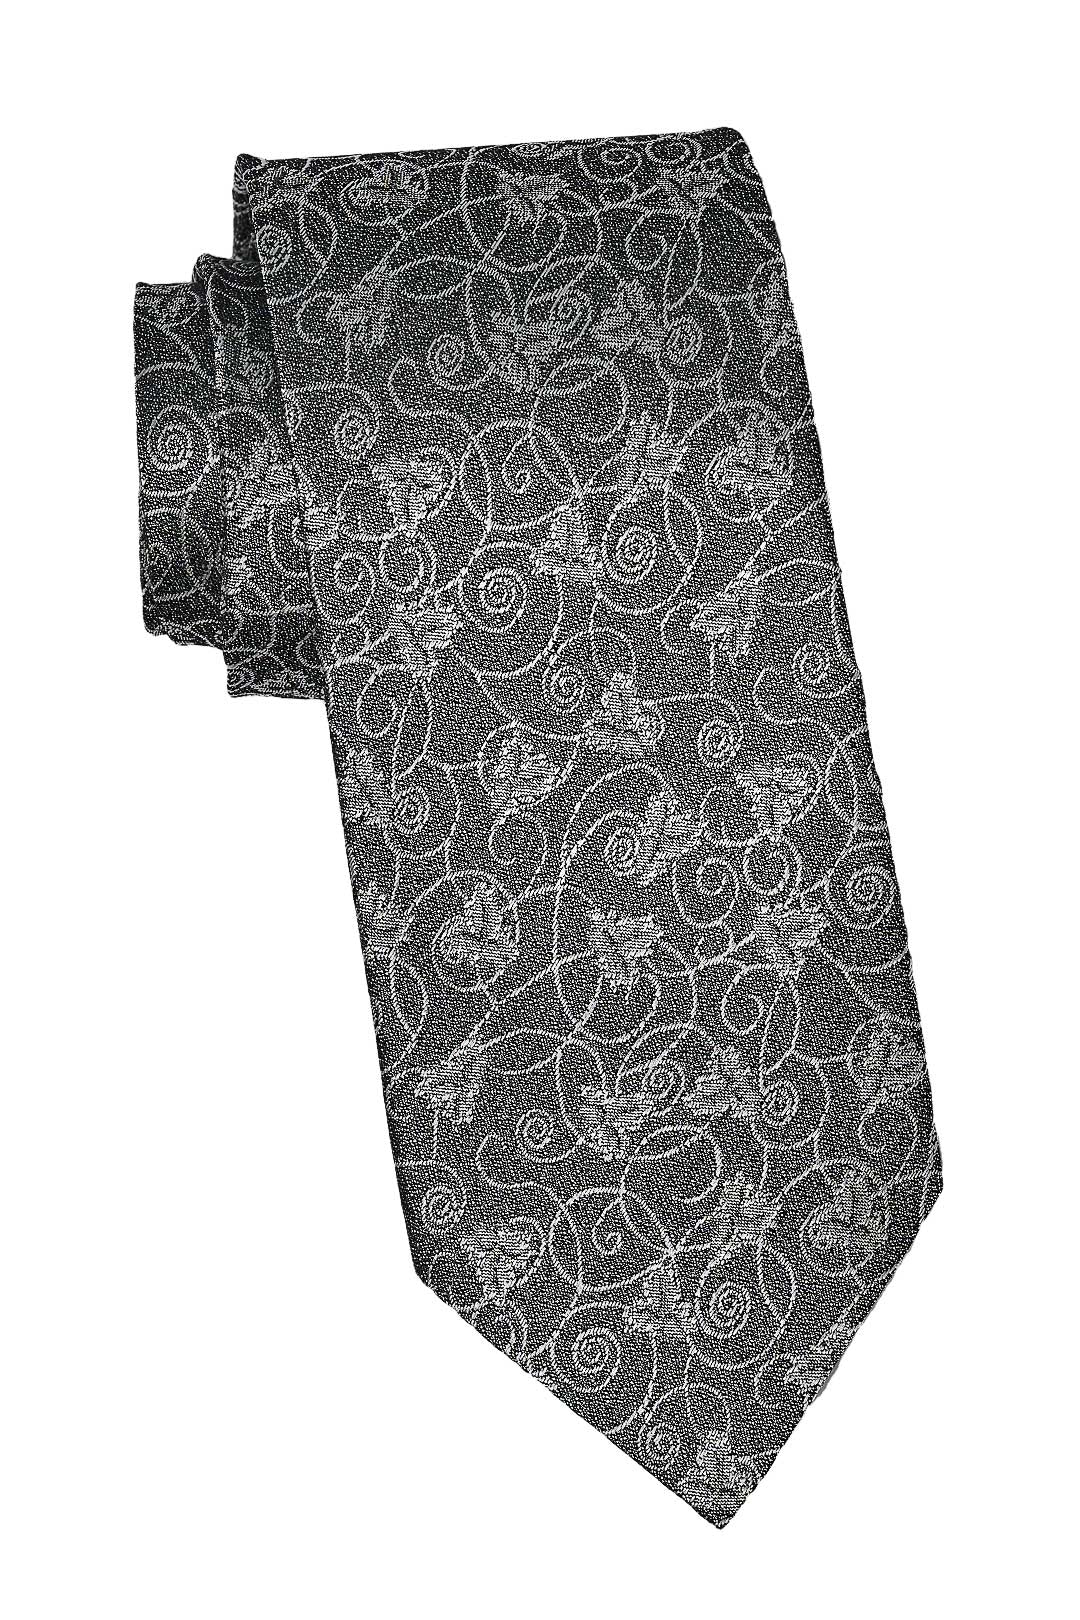 Flower Patterned Gray Tie